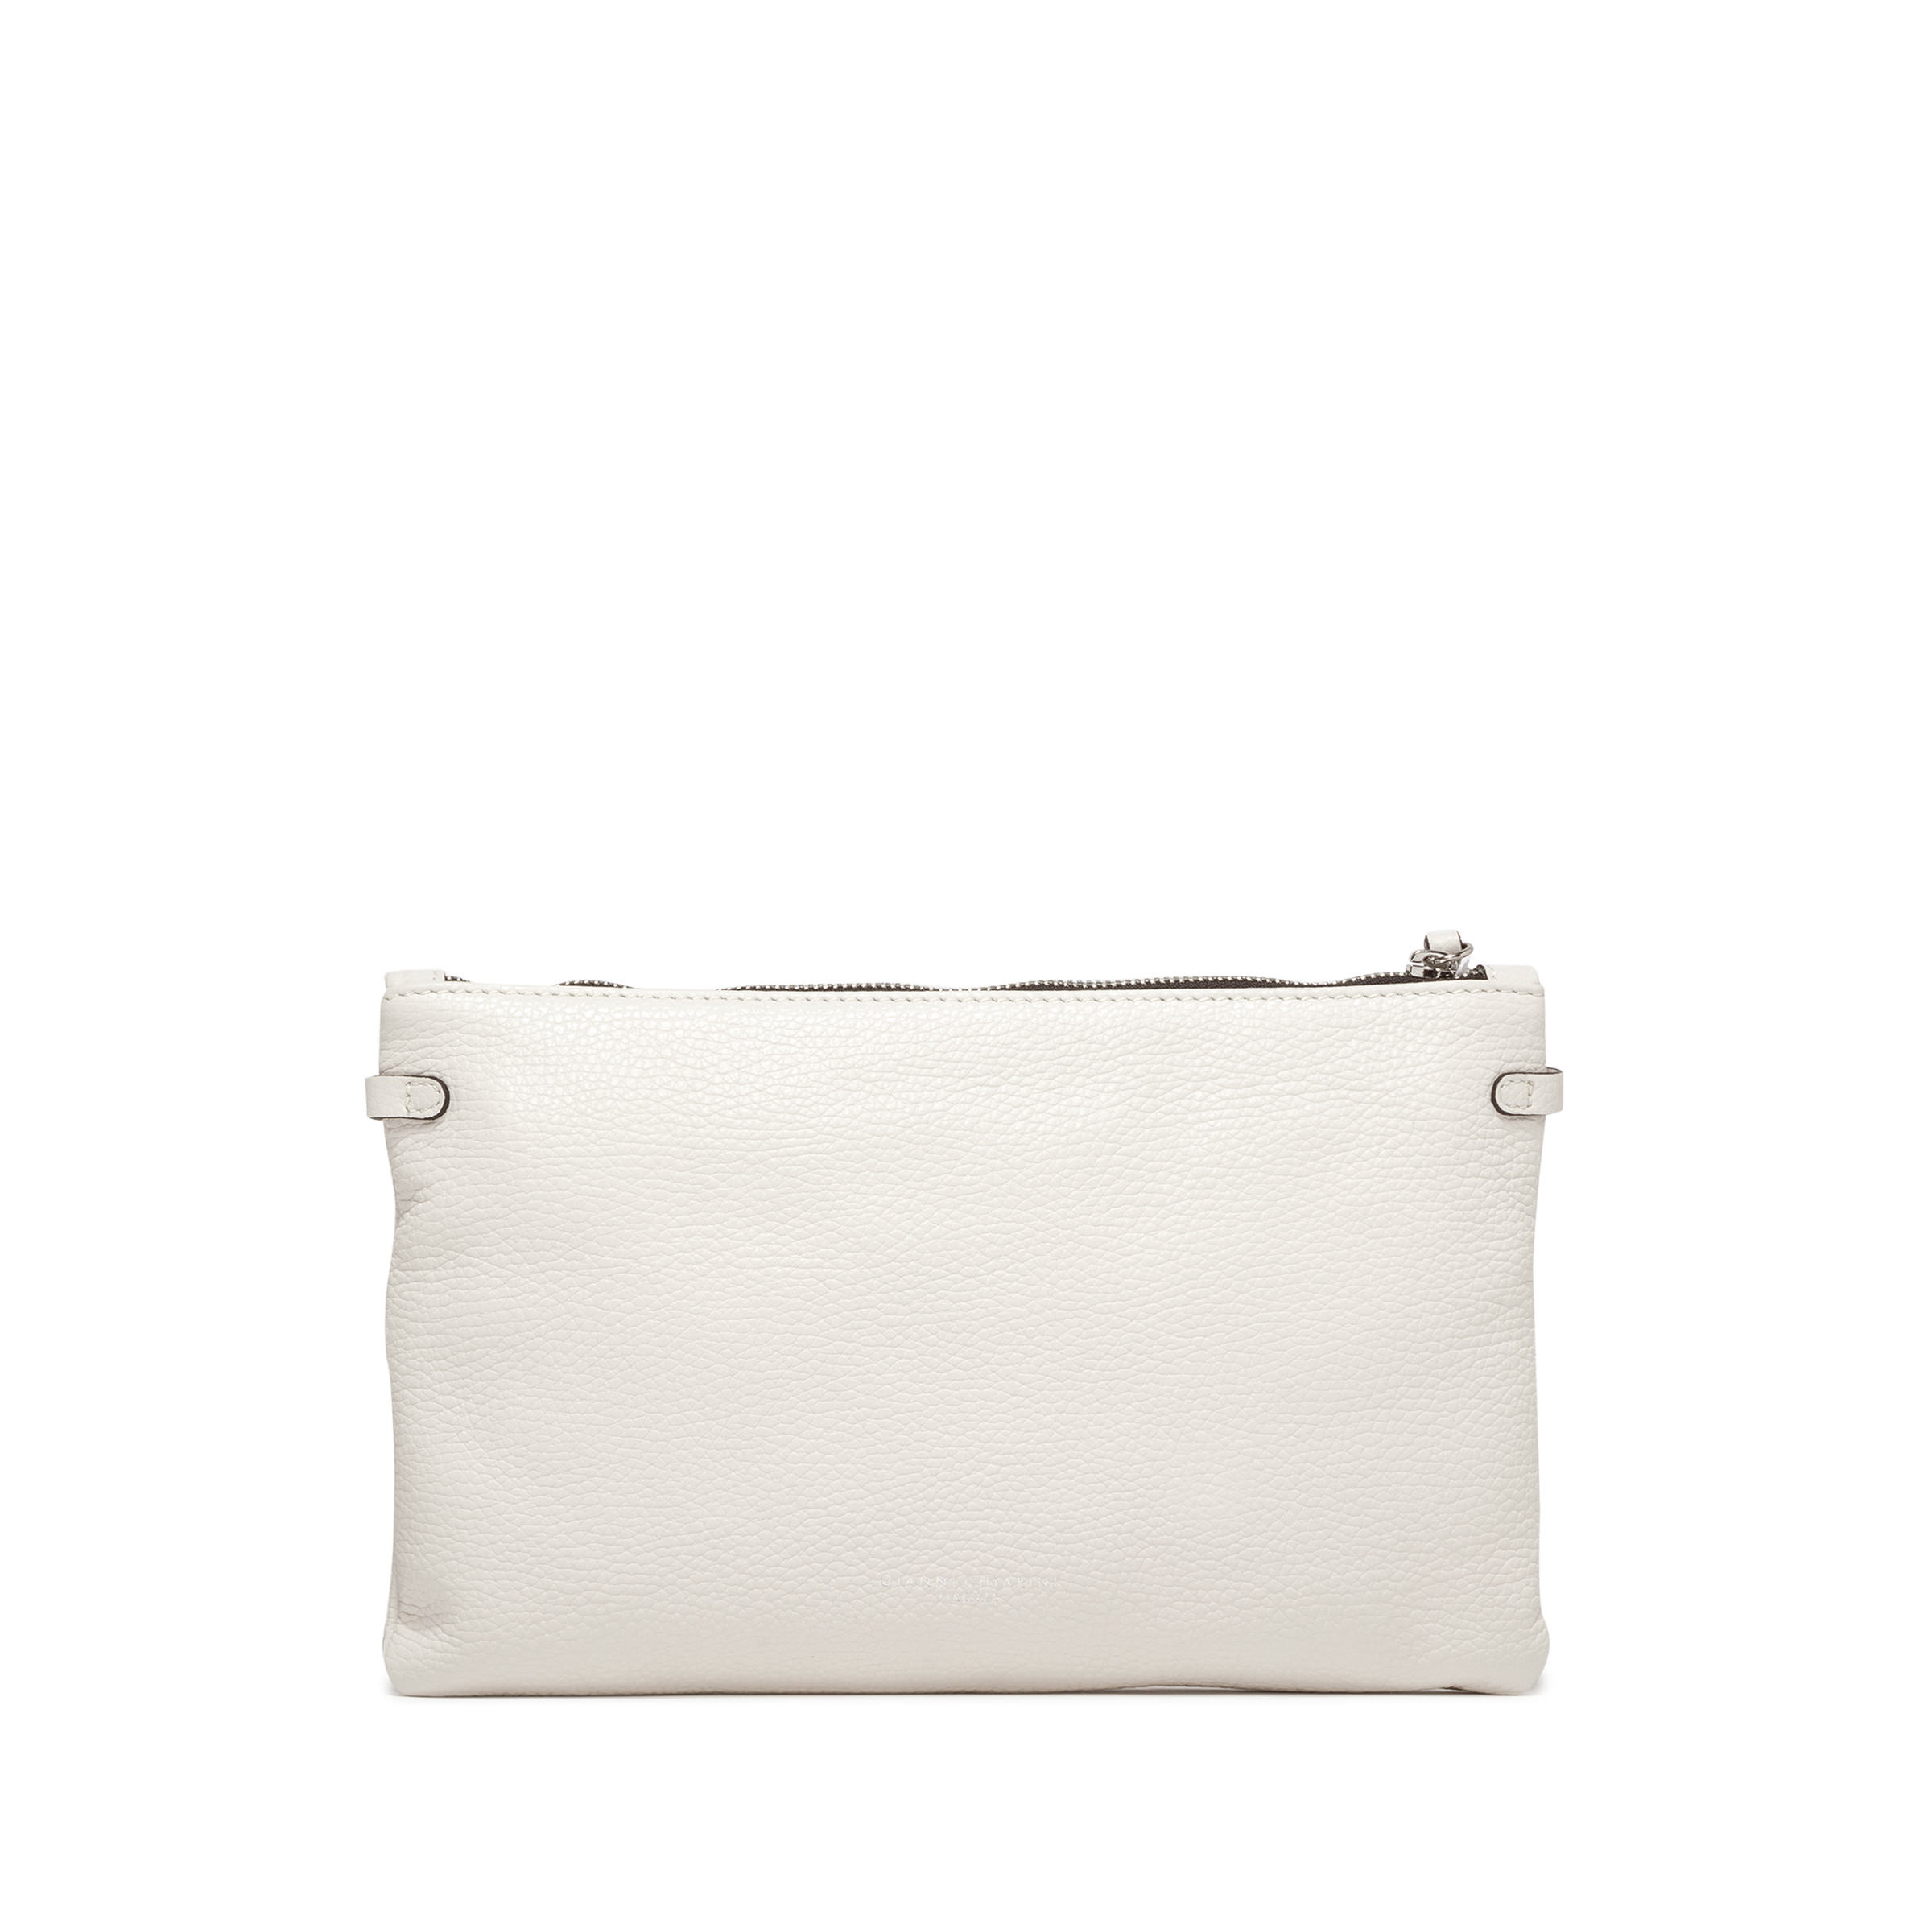 Gianni Chiarini - Hermy leather bag, White, large image number 2